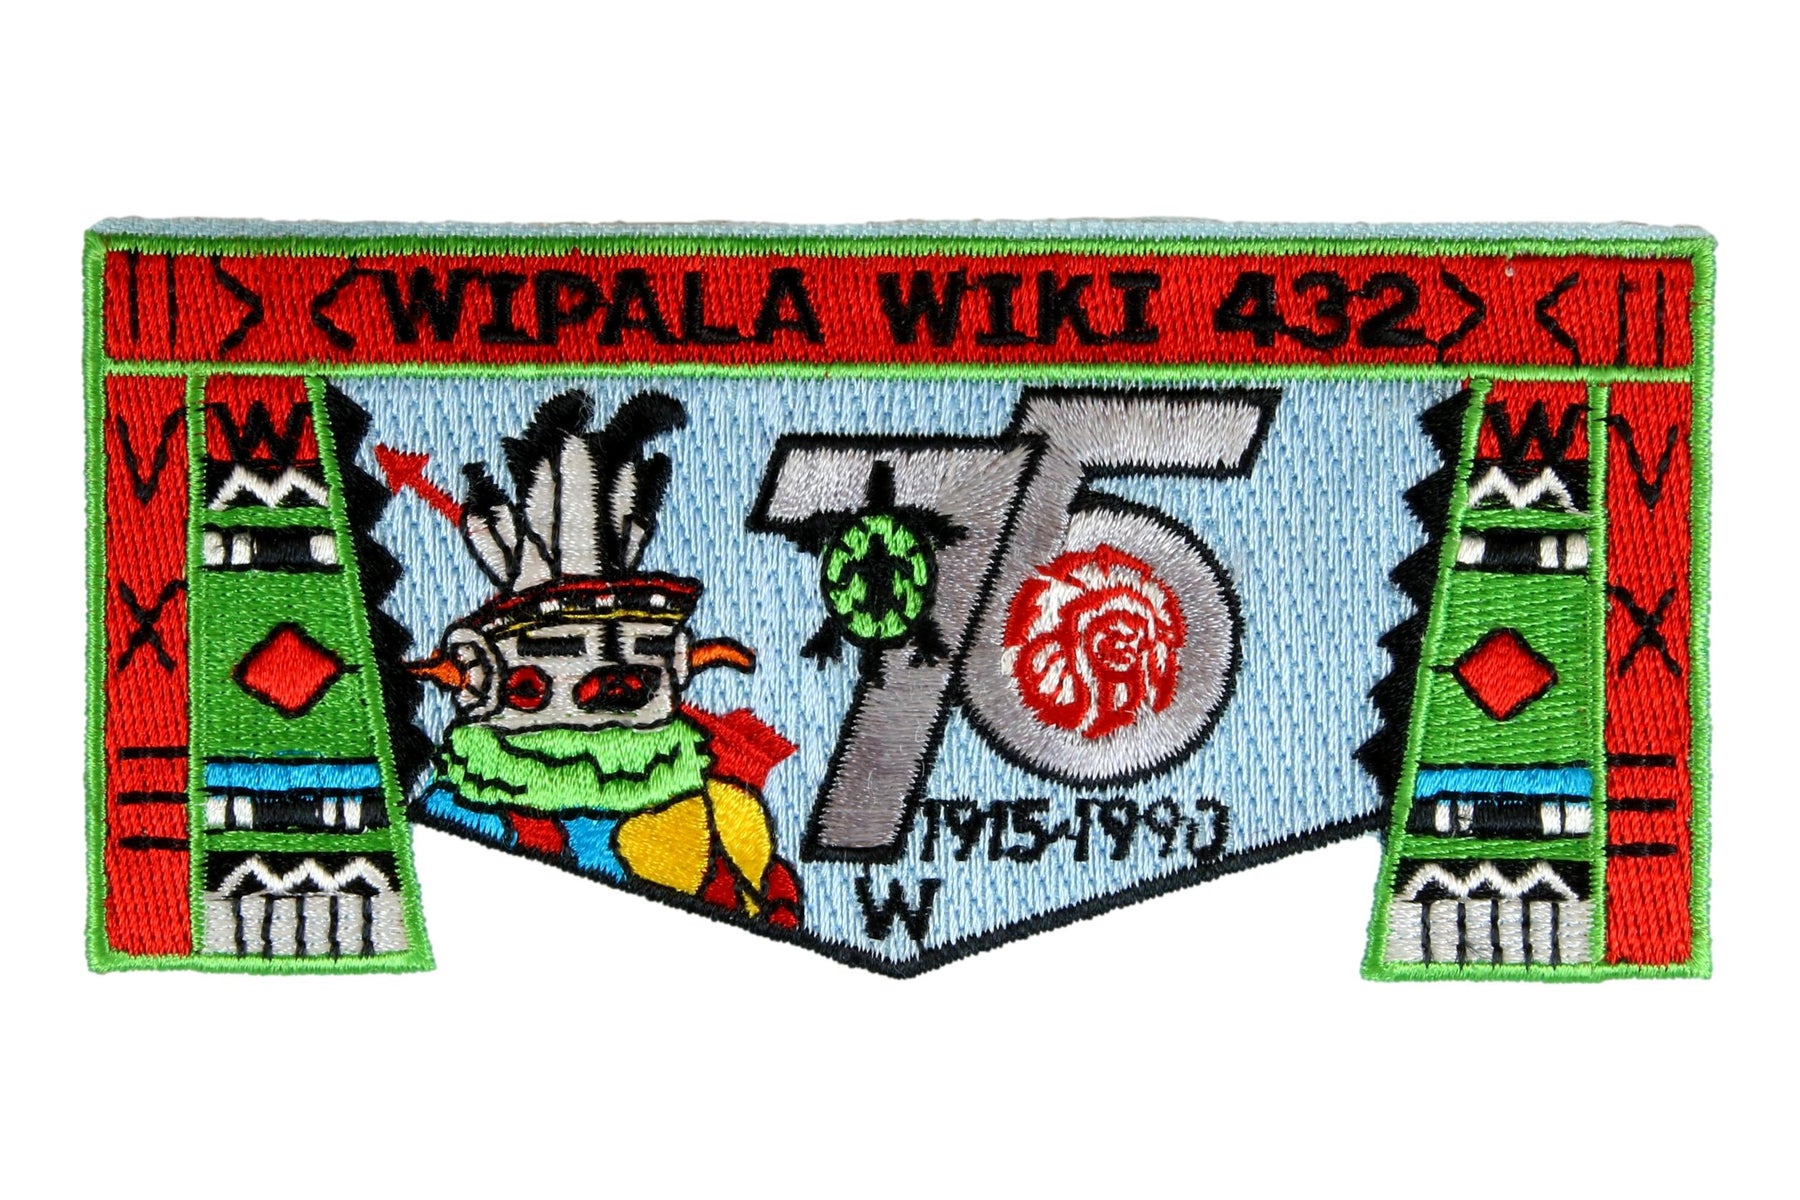 Lodge 432 Wipala Wiki Flap S-18 - 75th Anniv.